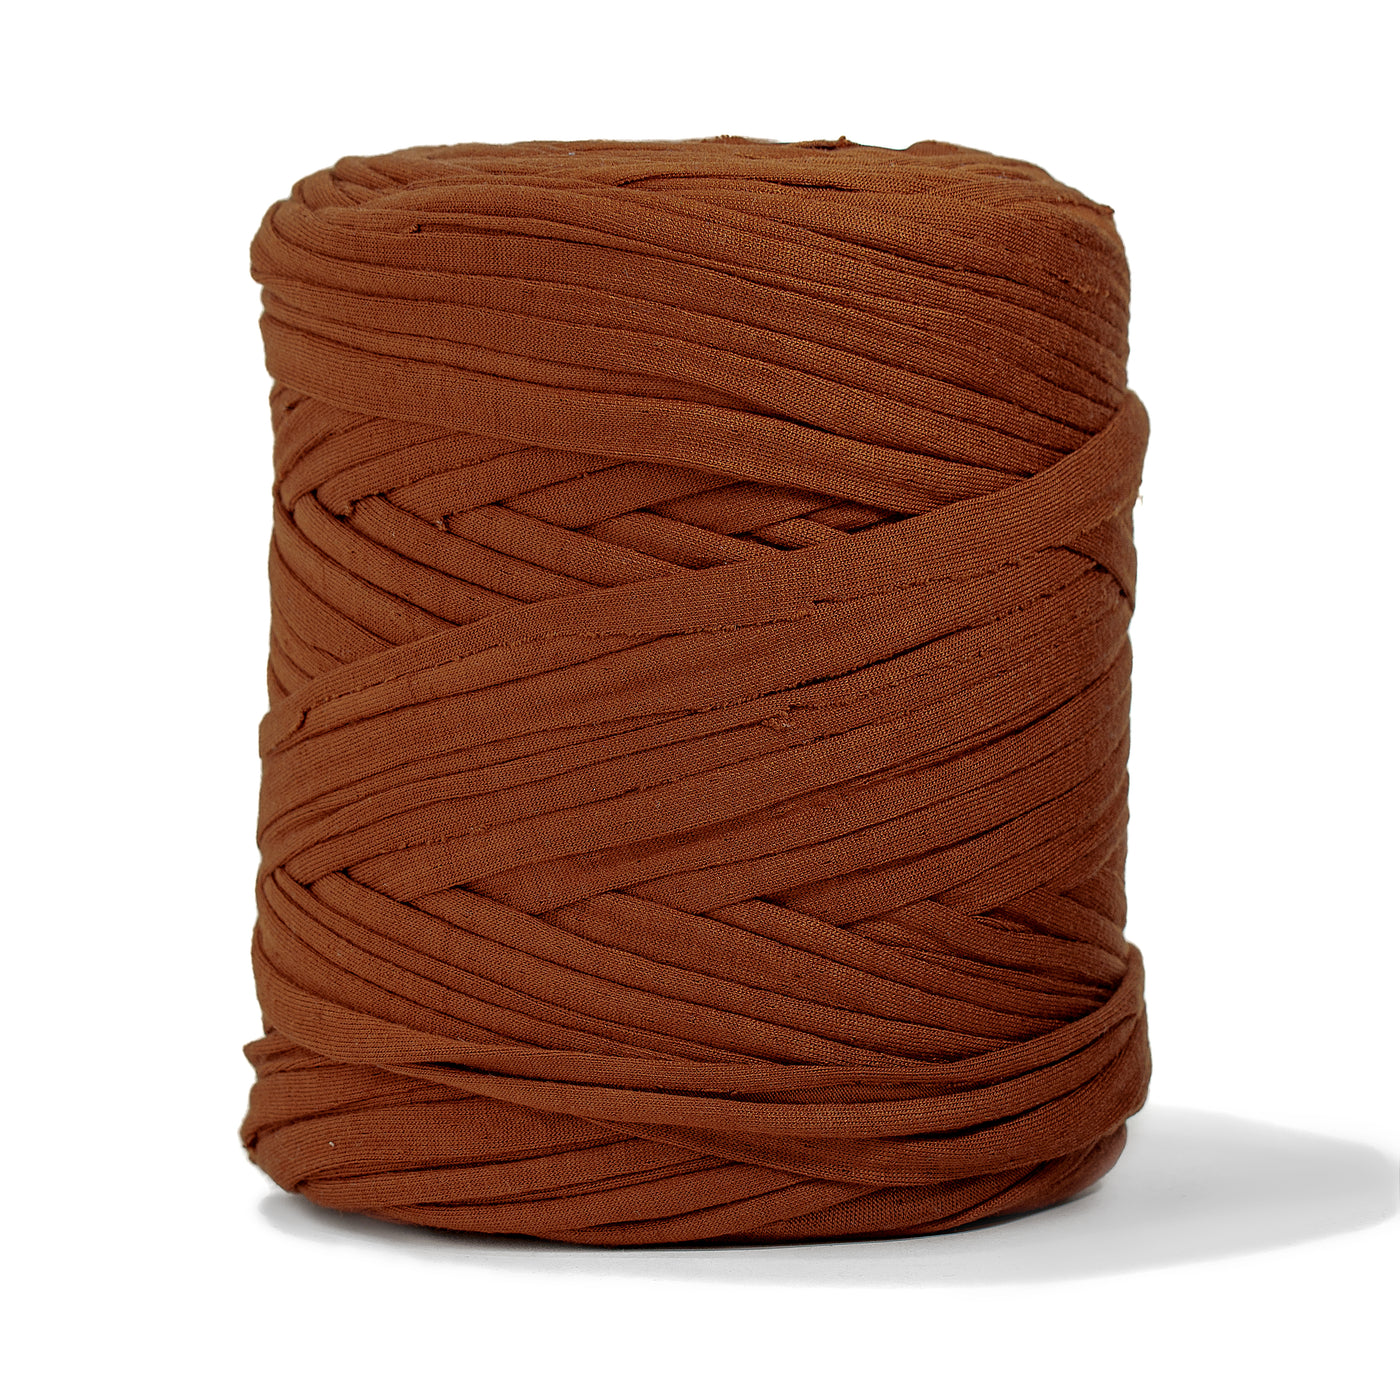 Recycled T-Shirt Fabric Yarn - Cinnamon Color